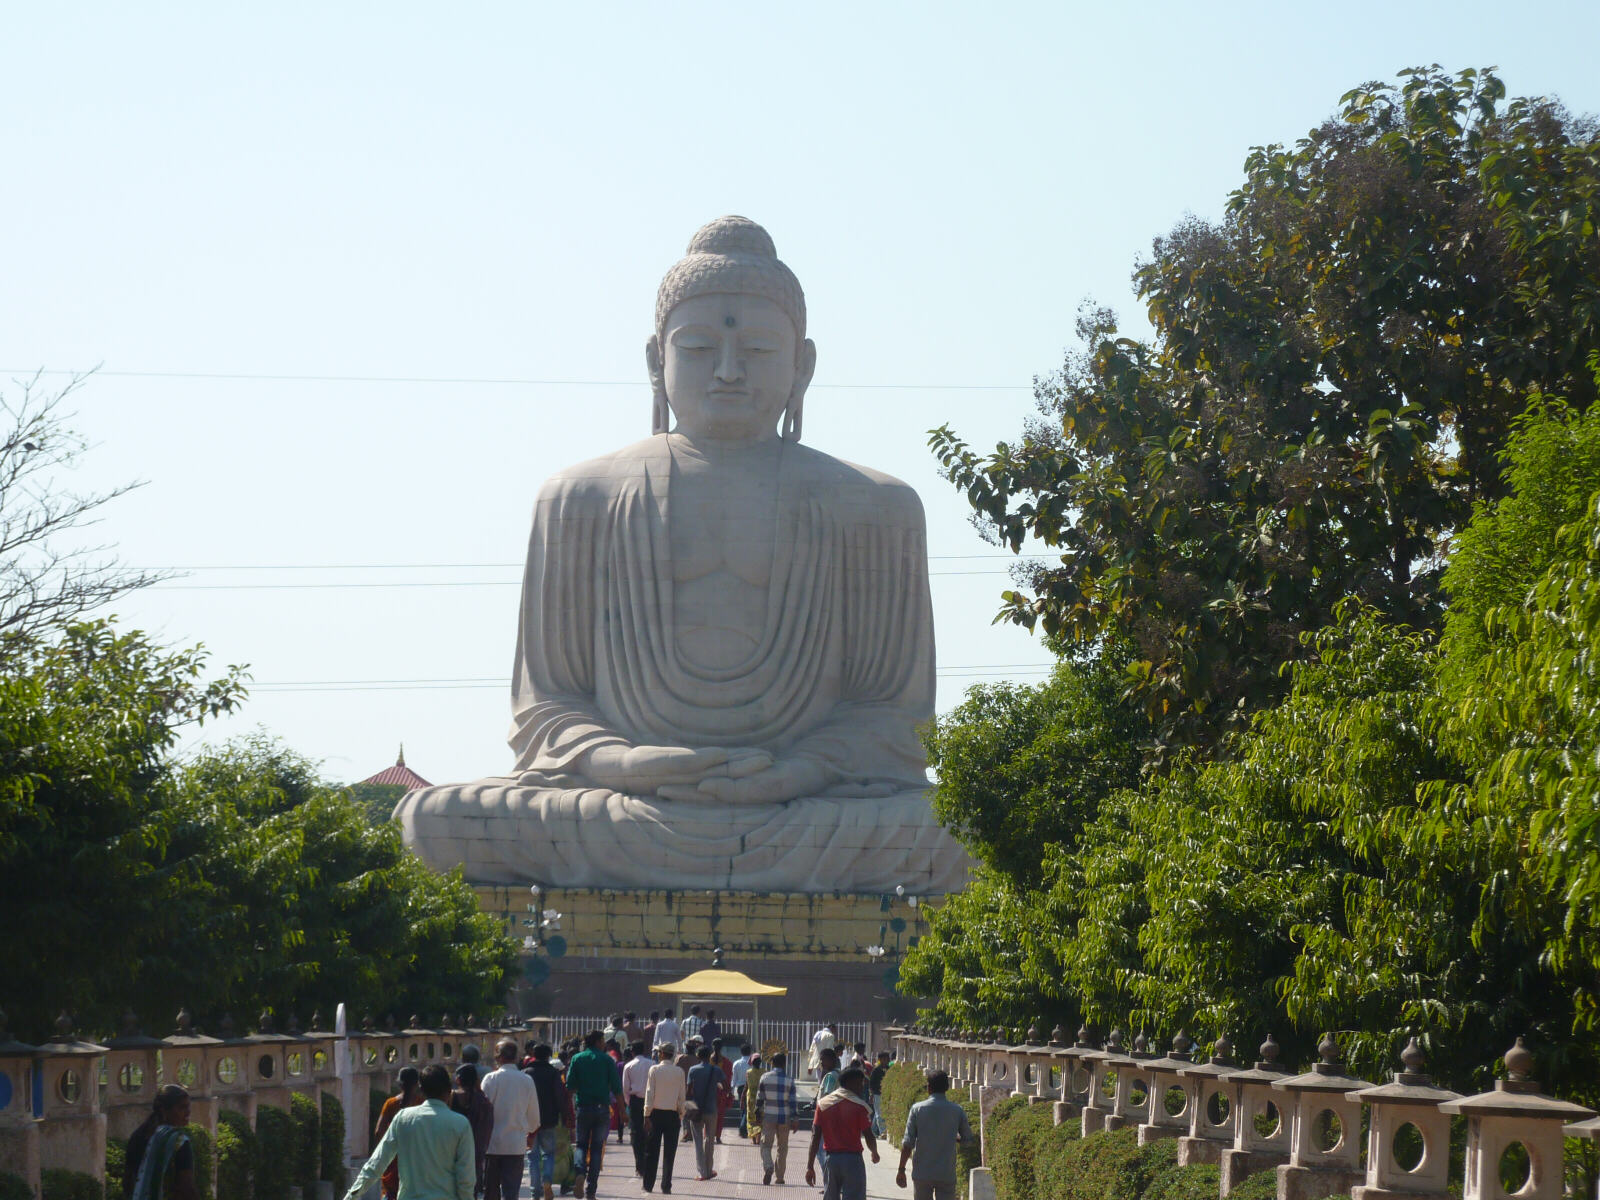 80-foot high Giant Buddha statue in Bodhgaya, India